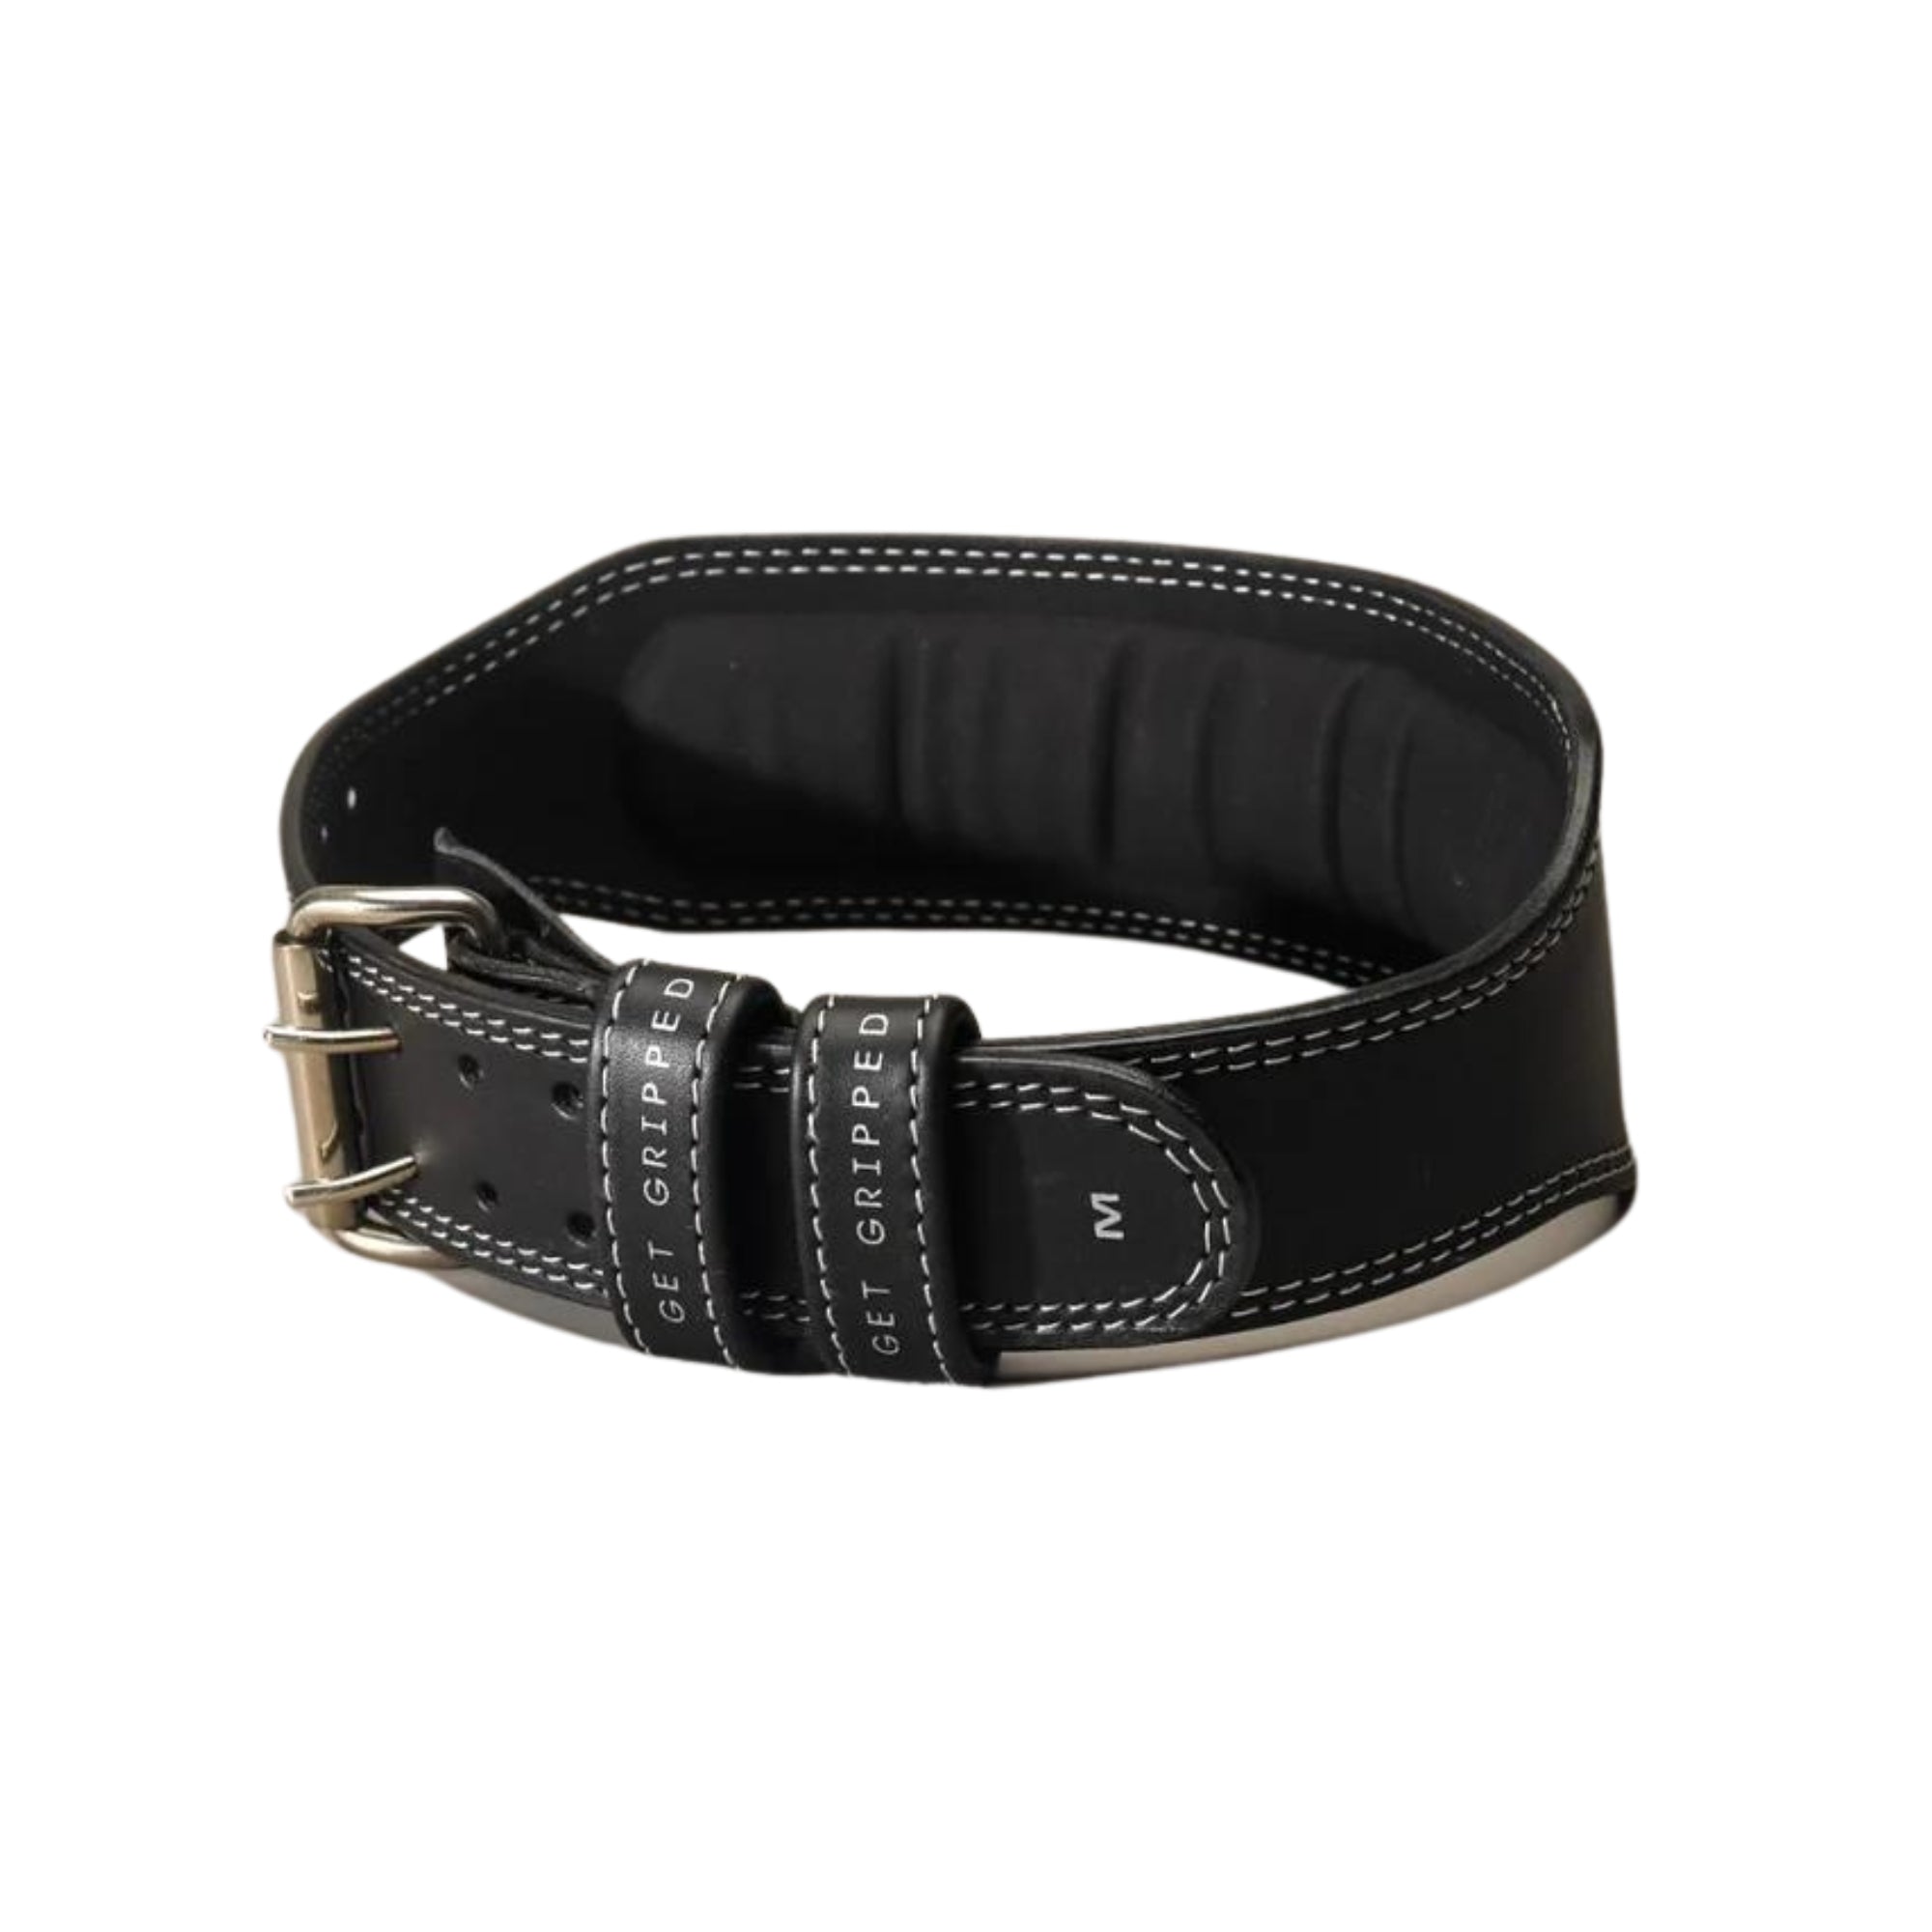 Get Gripped Leather Belt Black Rear